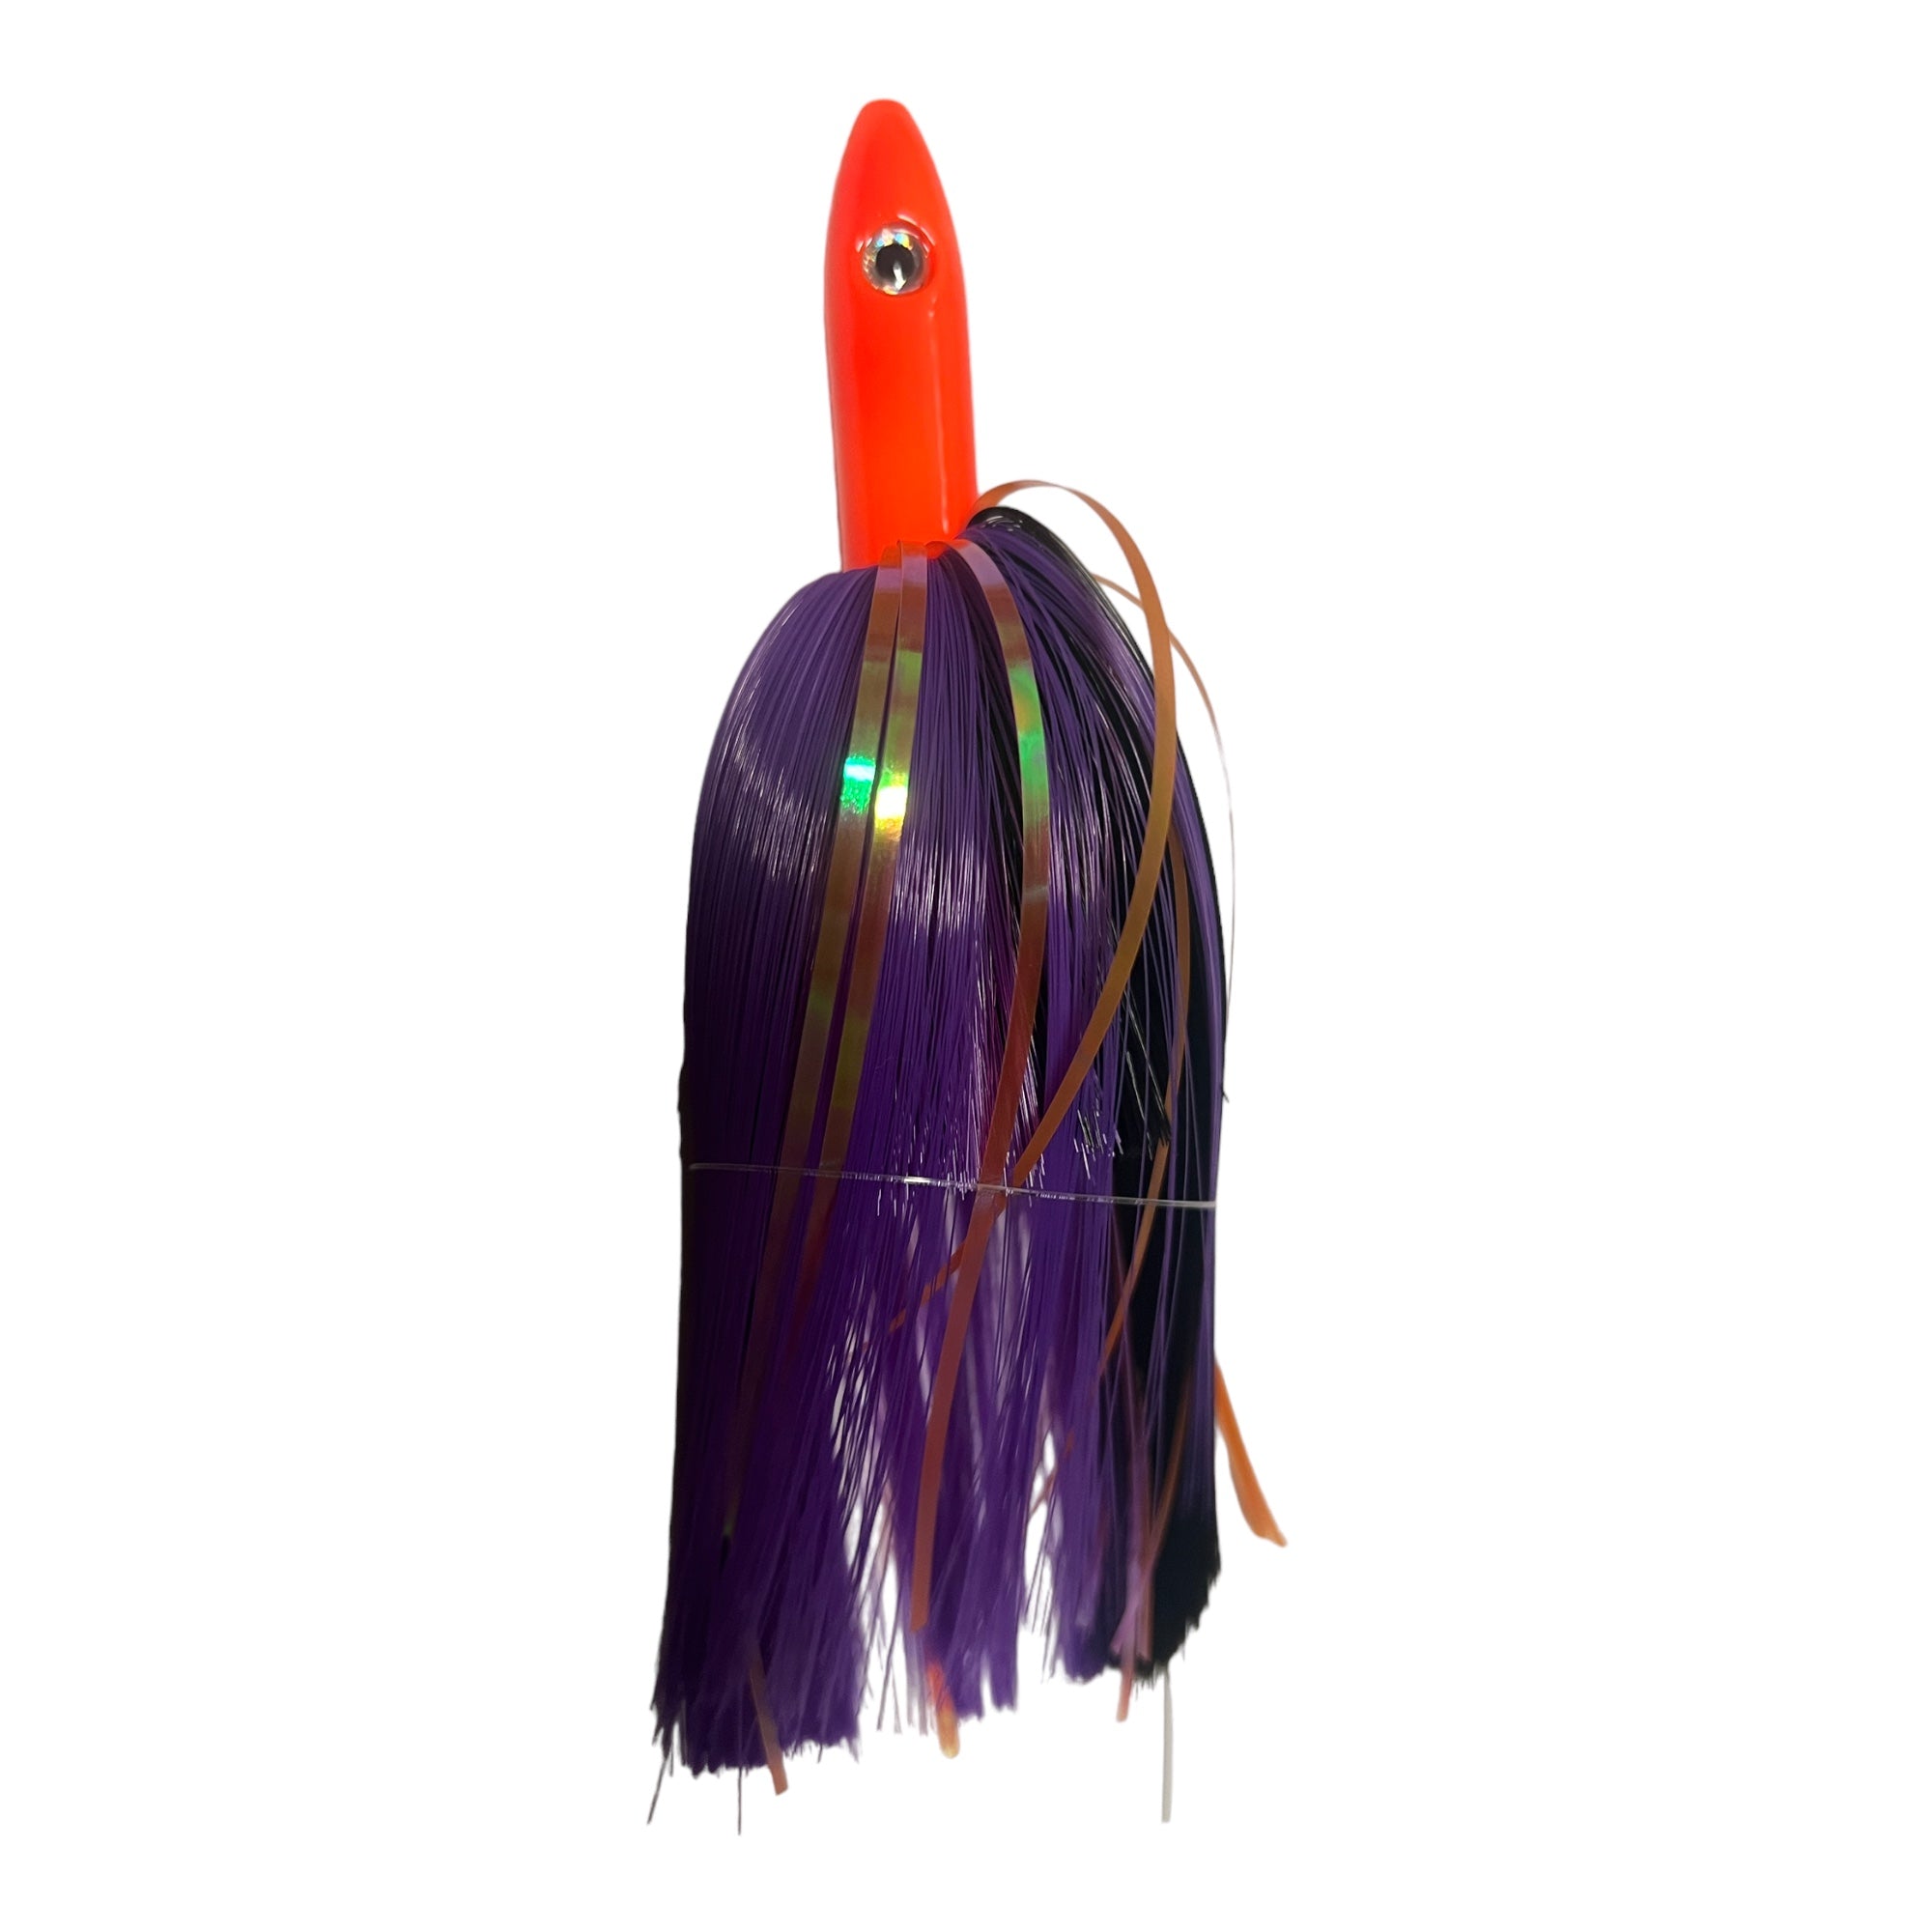 Islander Powder Coated - Orange, Purple Black W/Flasher